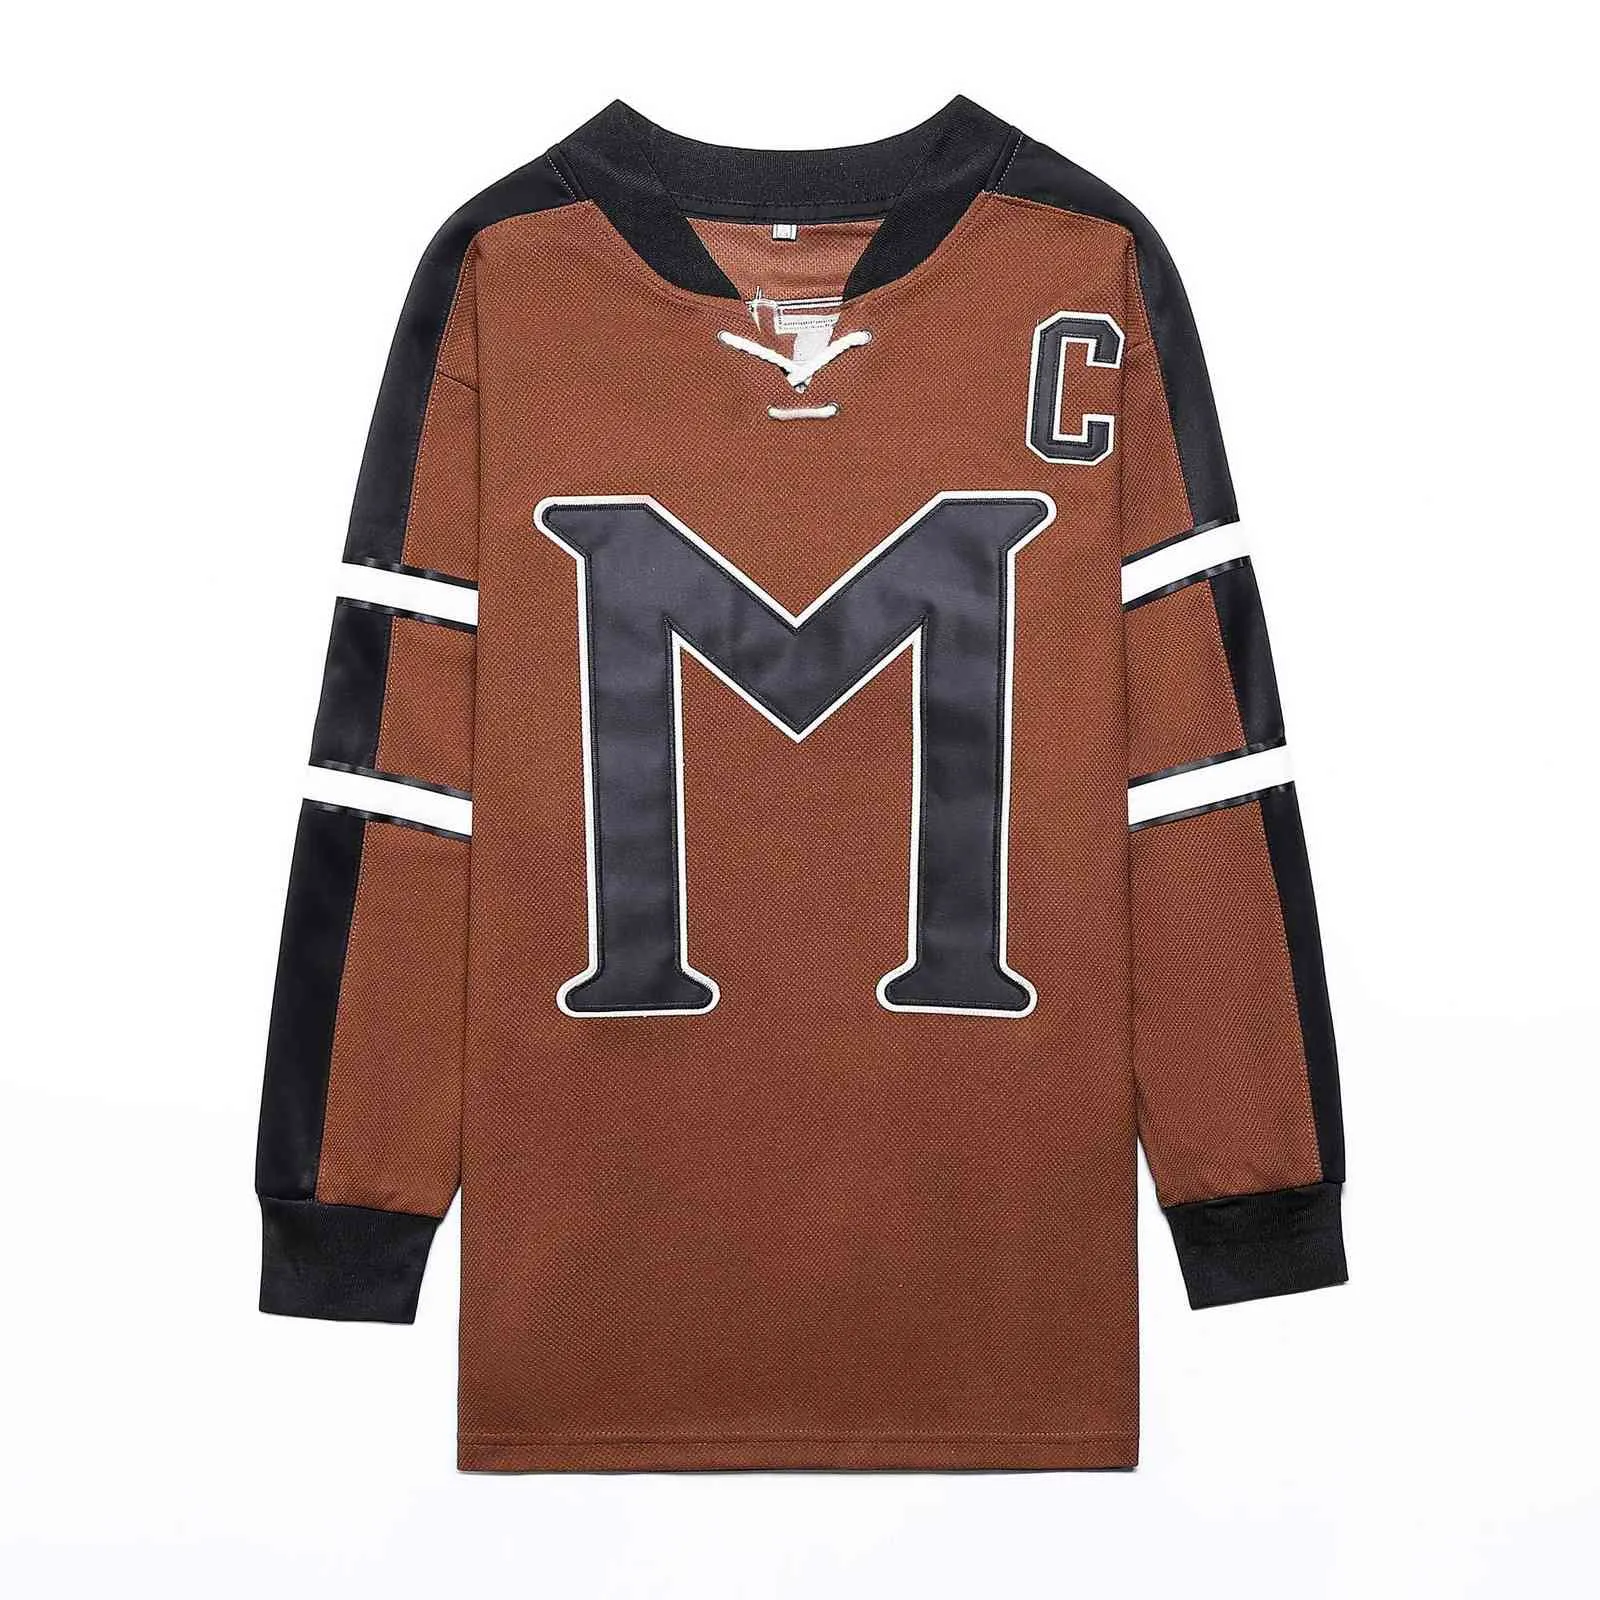 #10 Biebe Mystery Alaska Movie hockey Jerseys Mens SlapShot Biebe jersey S-XXXL accept custom any name number